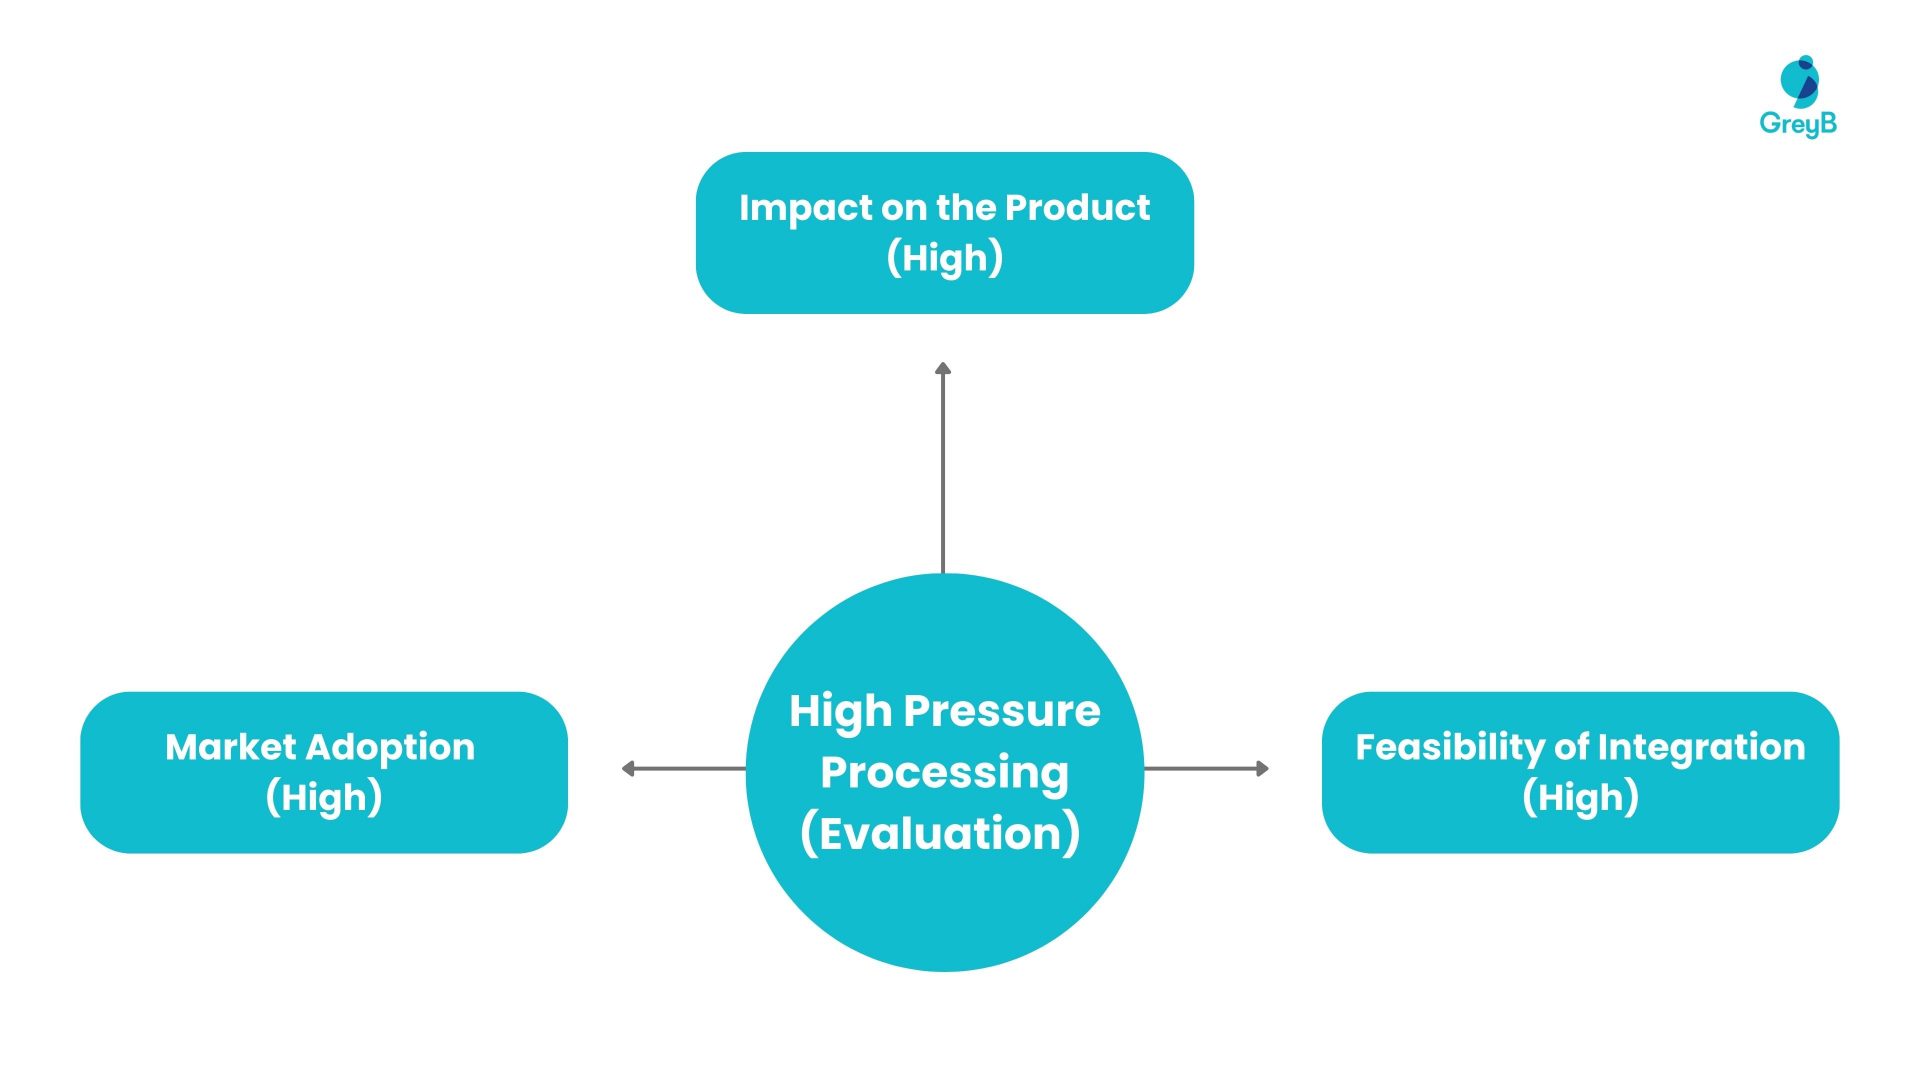 High Pressure Processing (Evaluation)